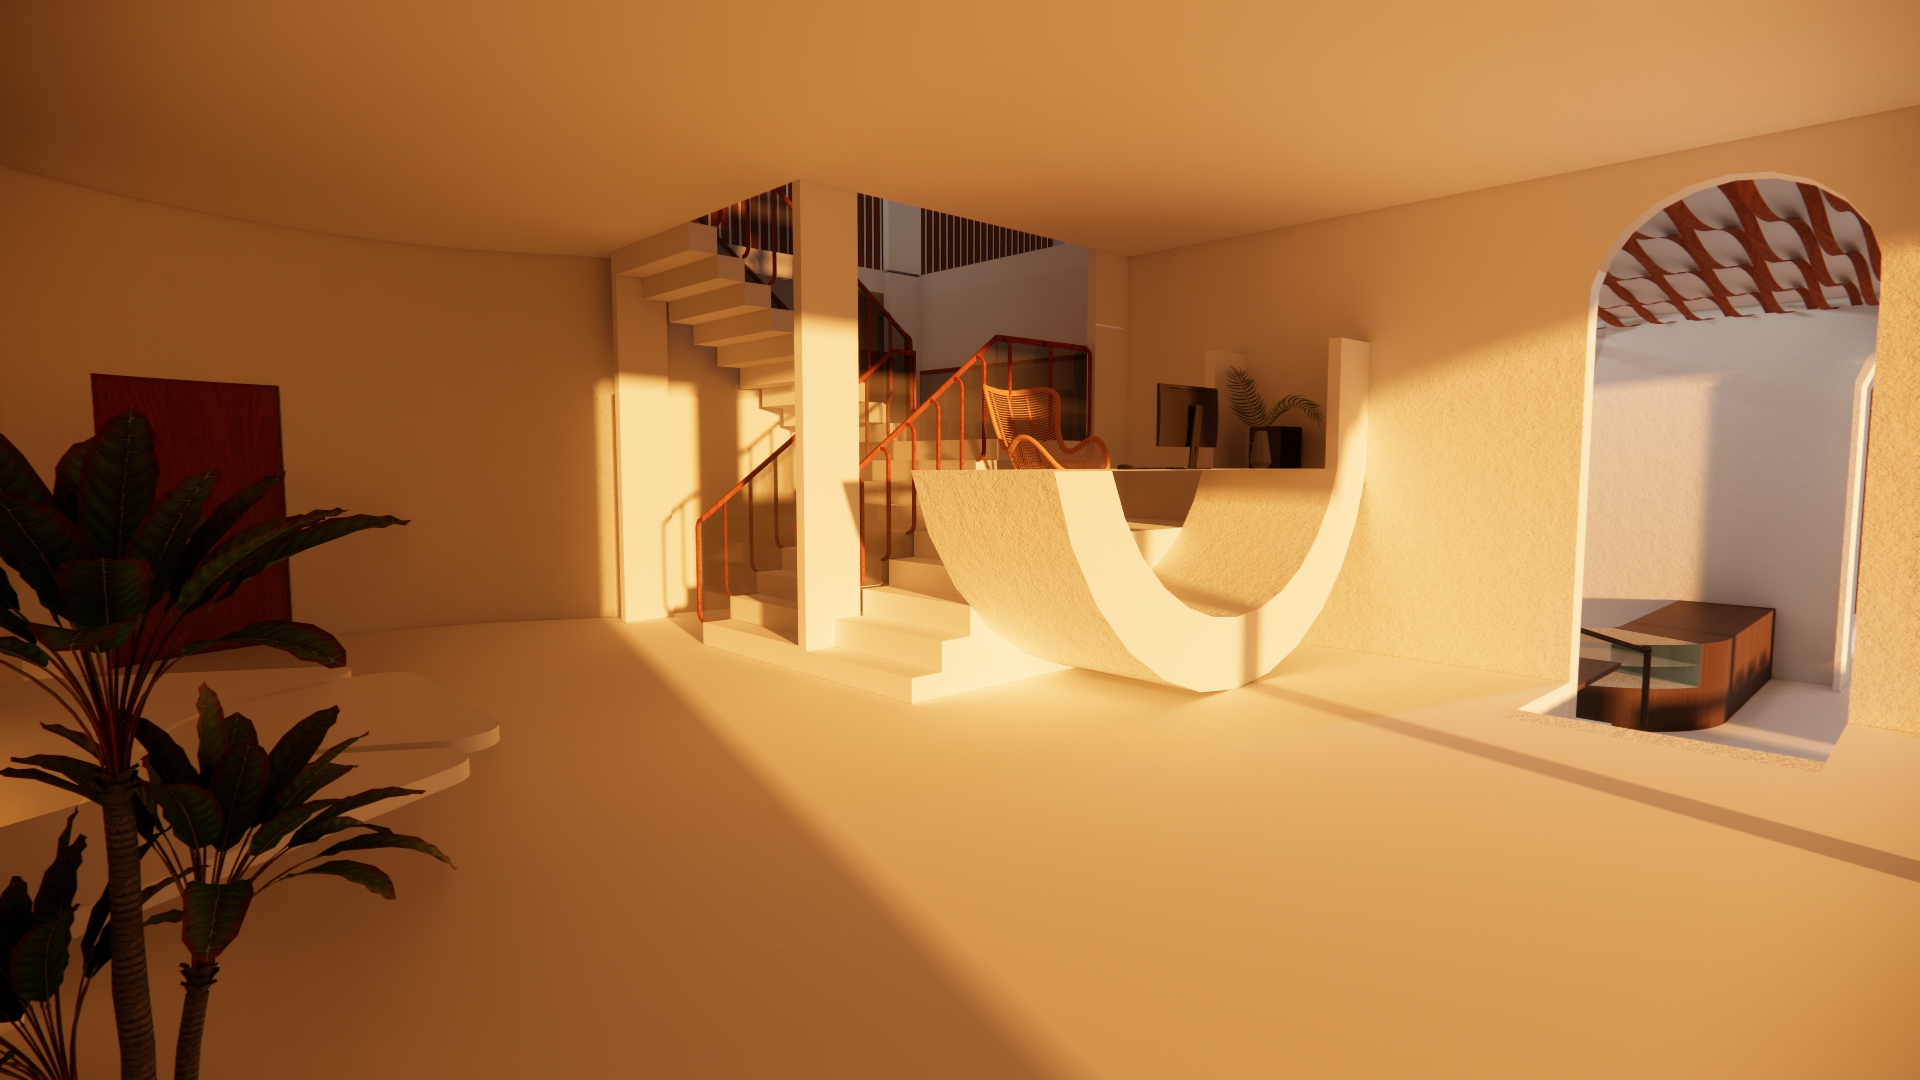 Meng Liu | Interior Design 2